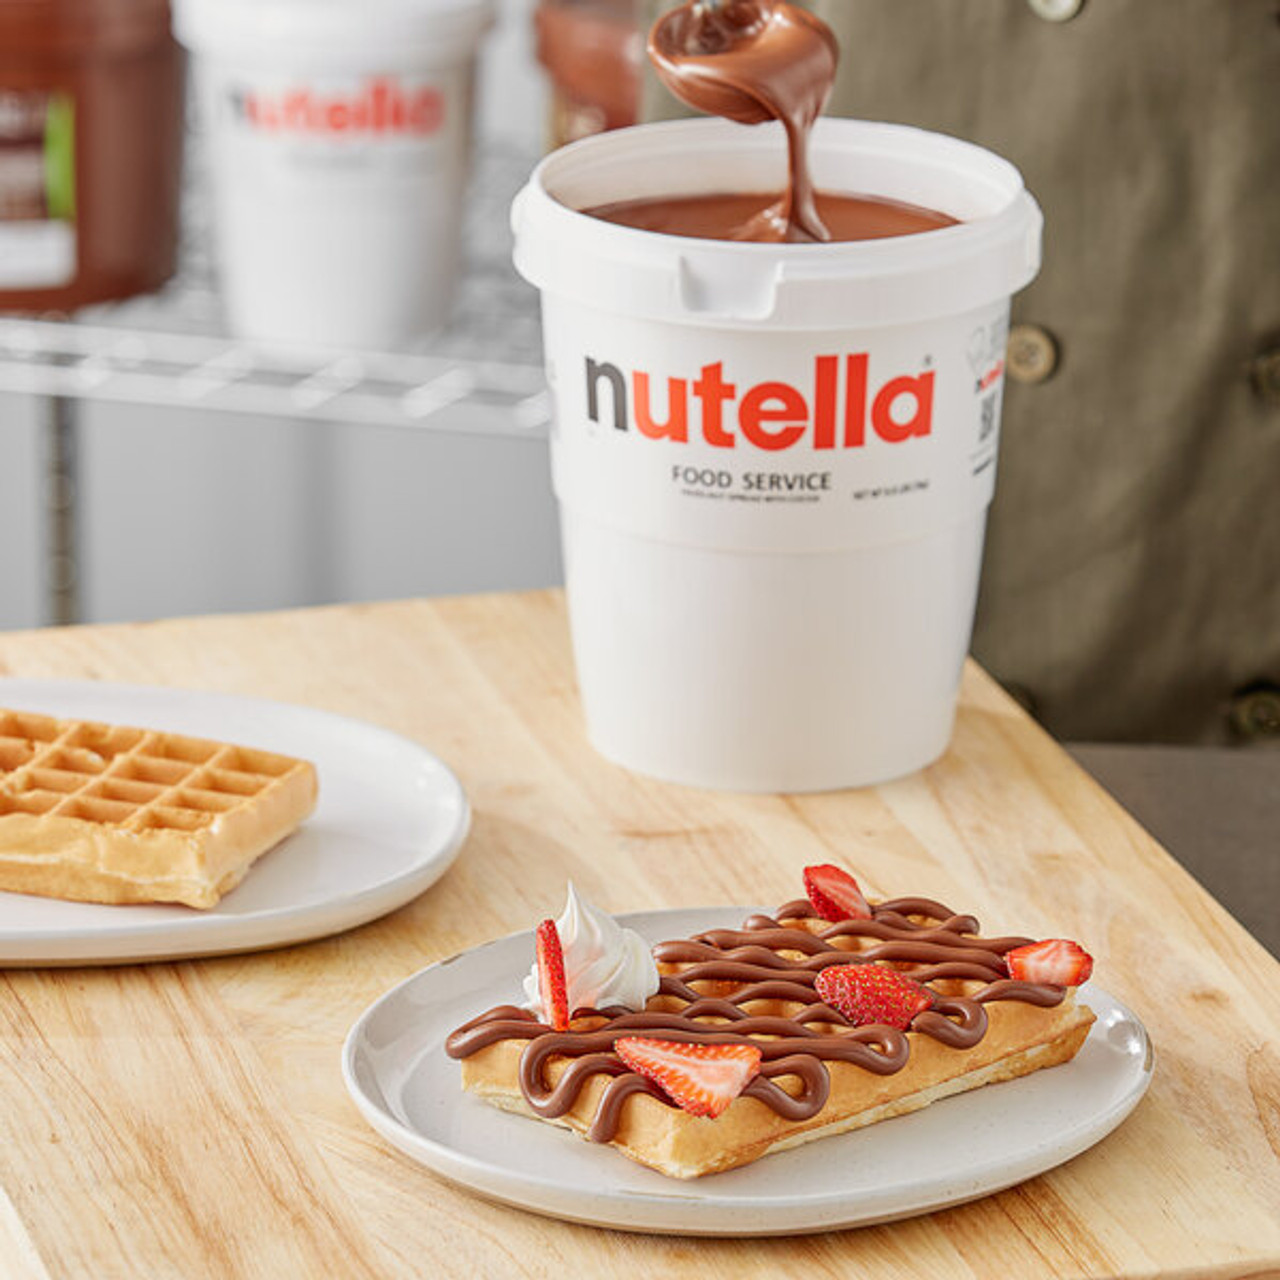 Nutella Chocolate Hazelnut Spread, Bulk Size for Food Service (3kg) 6.6 lb  Tu